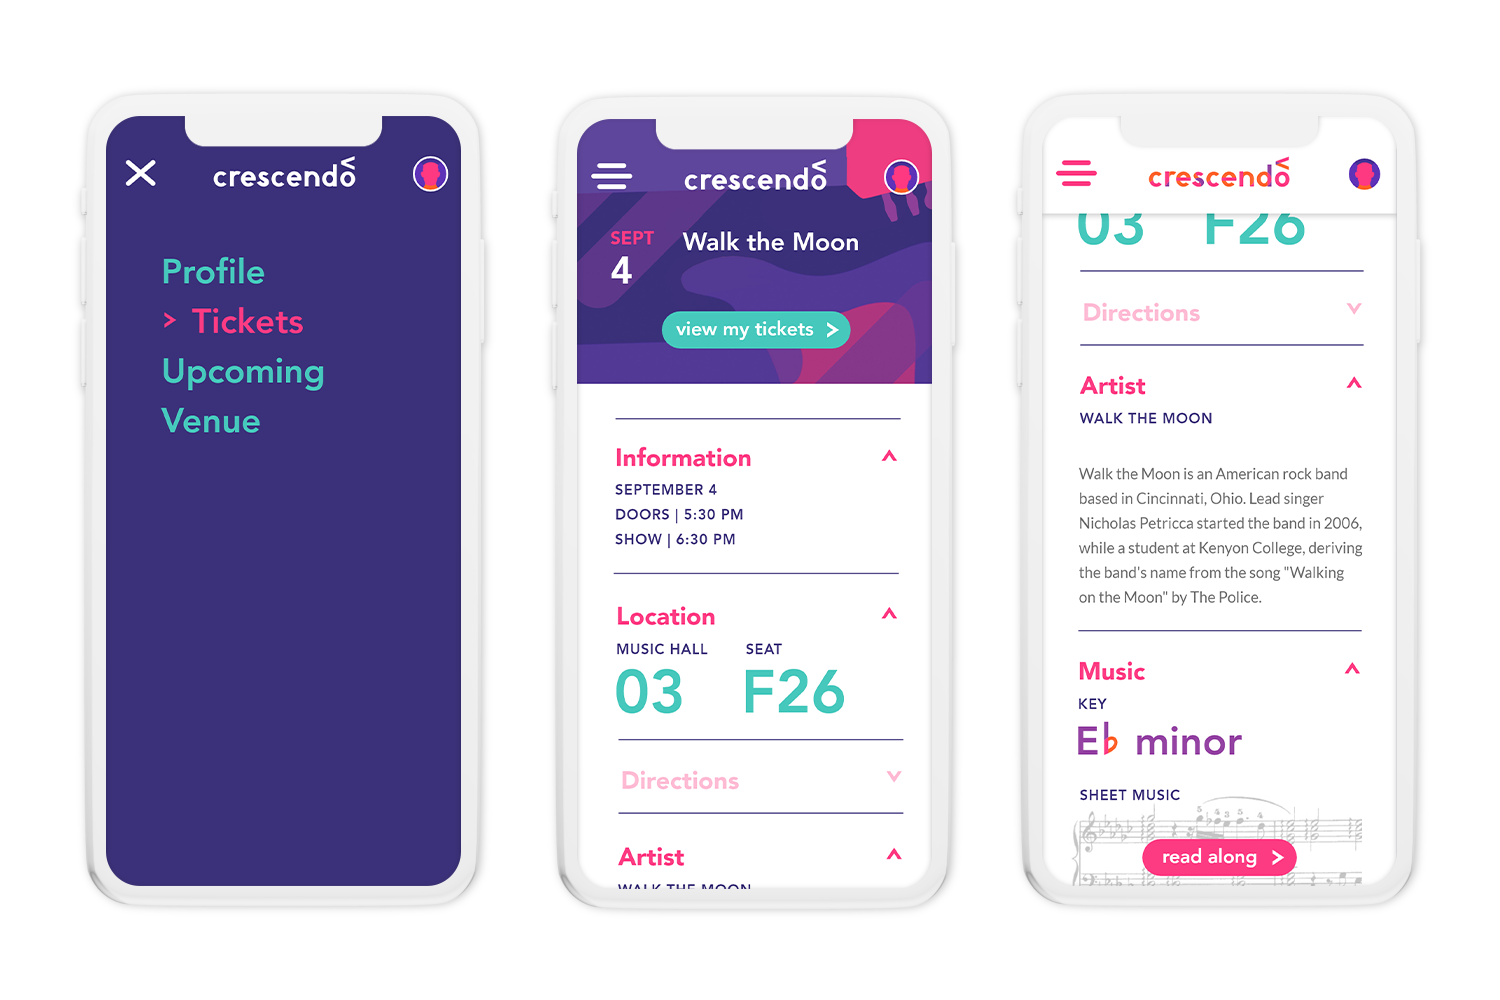 crescendo ticketing app design in mobile mockups